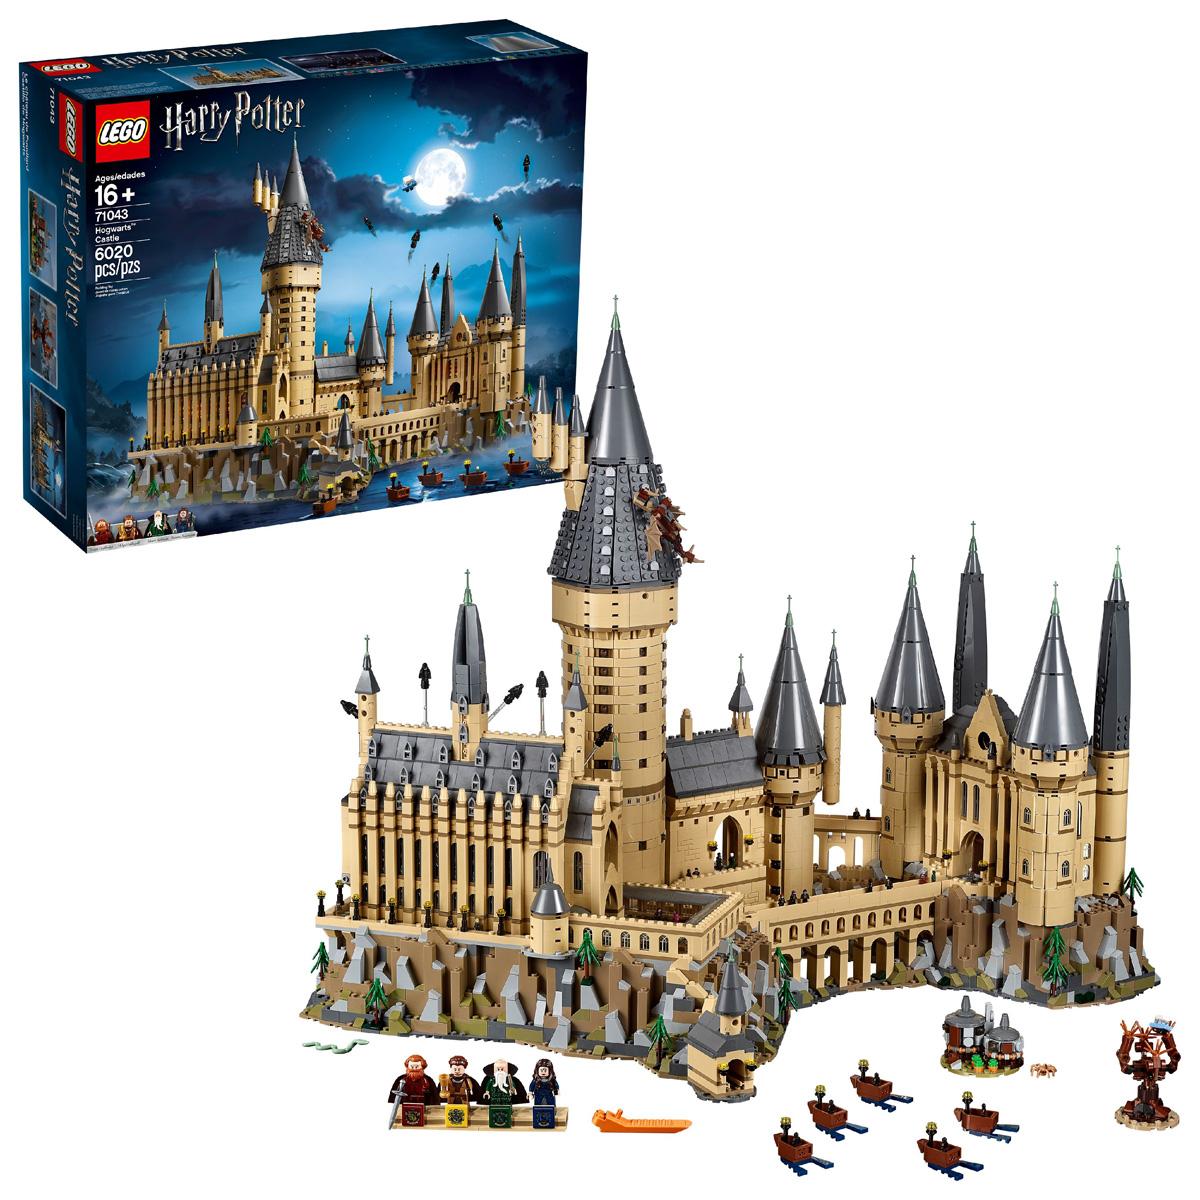 6020-Piece LEGO Harry Potter Hogwarts Castle Building Kit for $339.99 Shipped